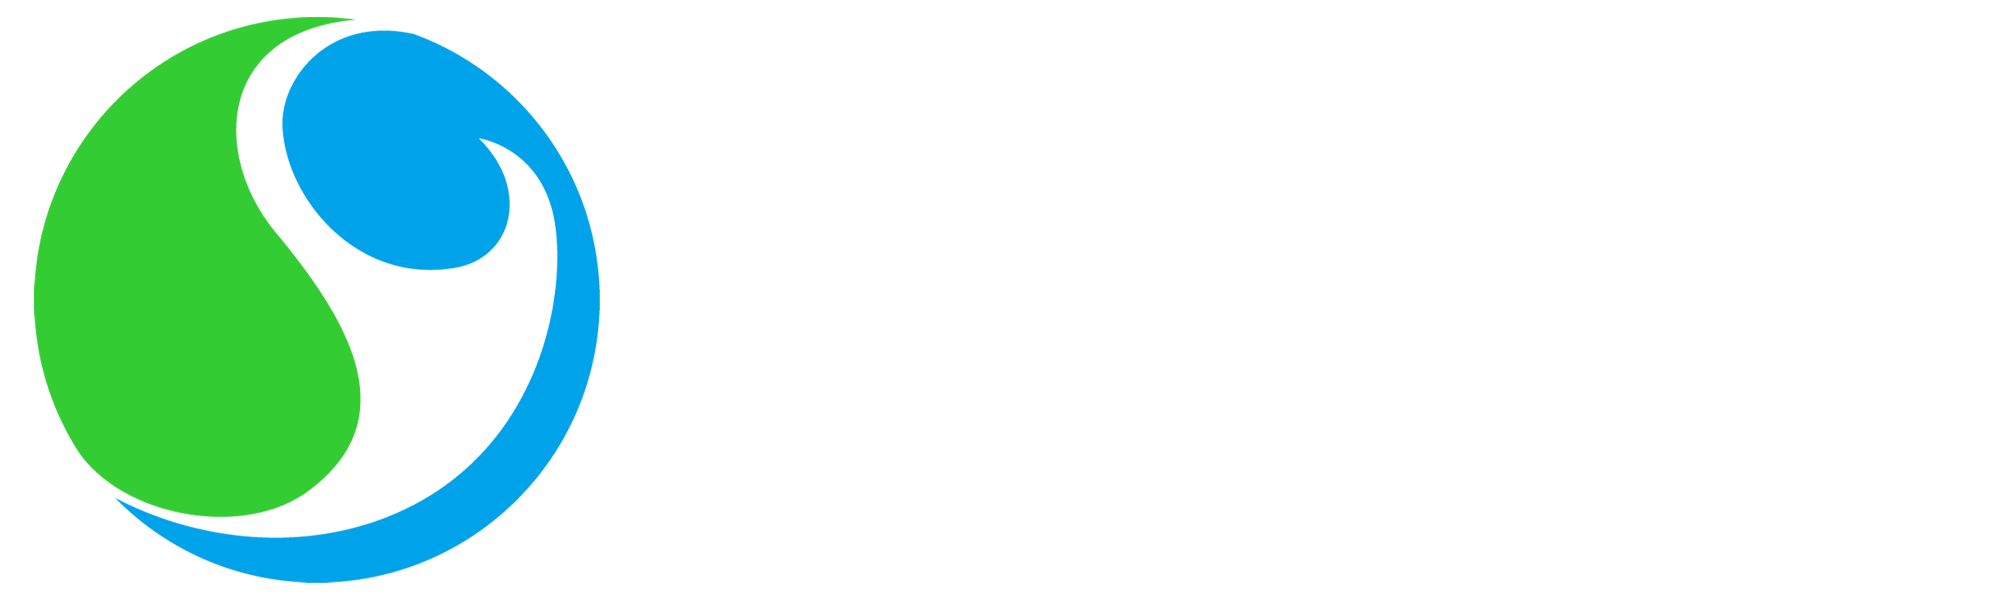 Oushangyuan-logo-ok-fuben-iningwen